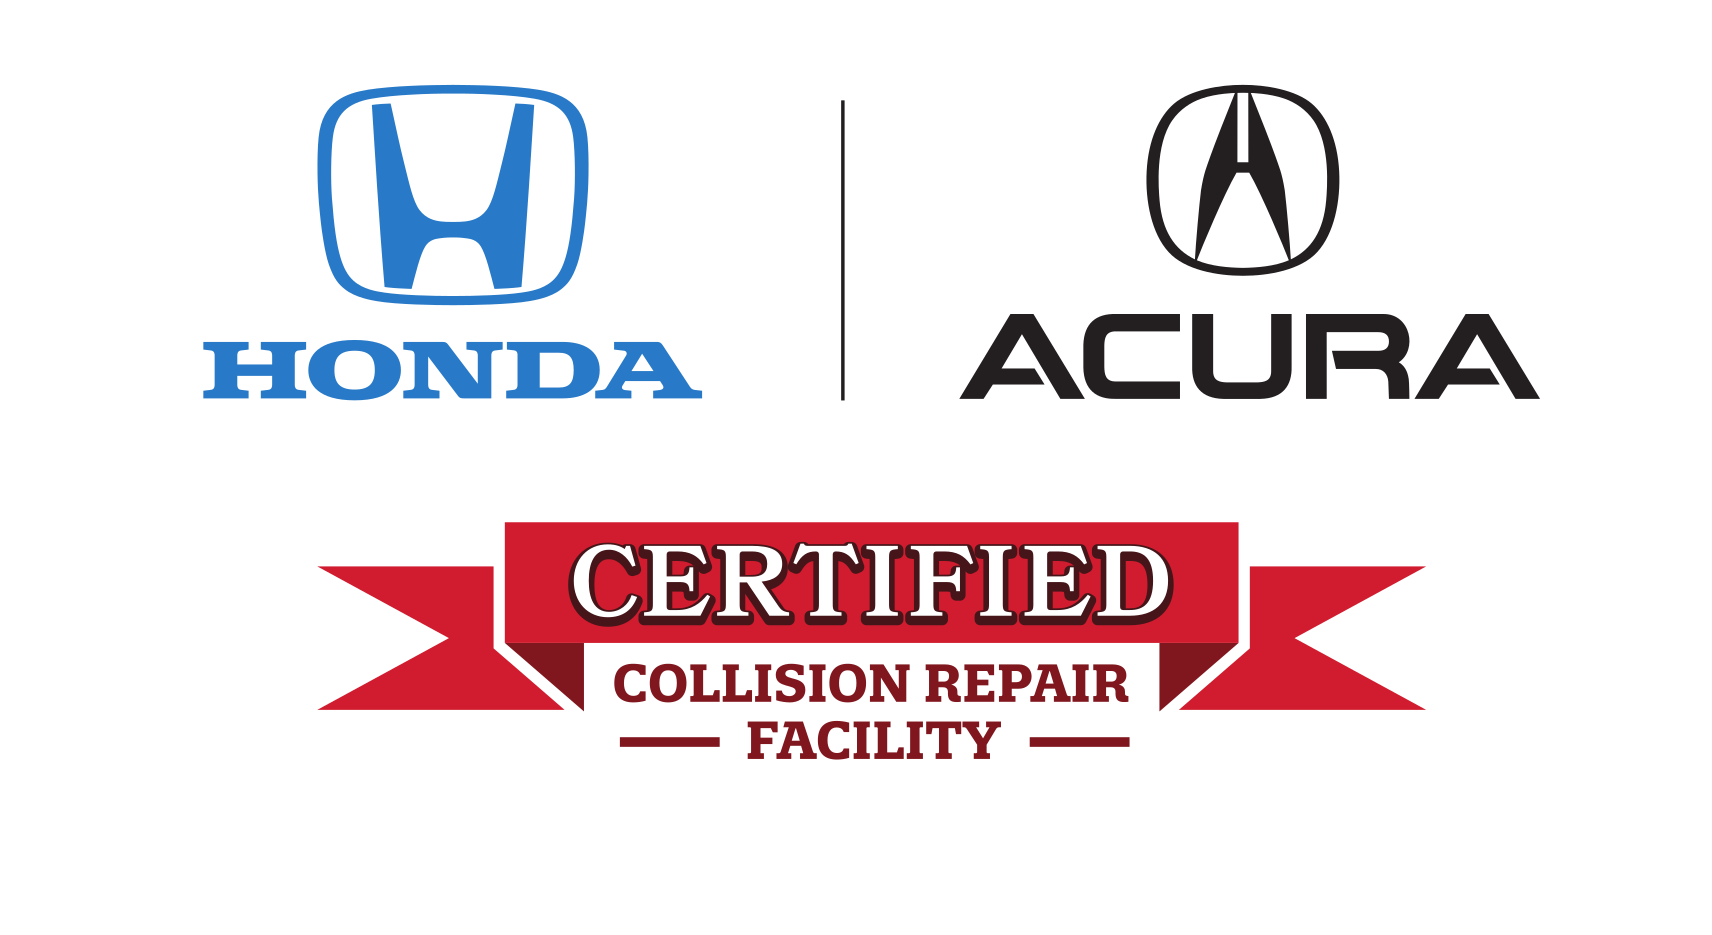 Honda & Acura Collision Certified